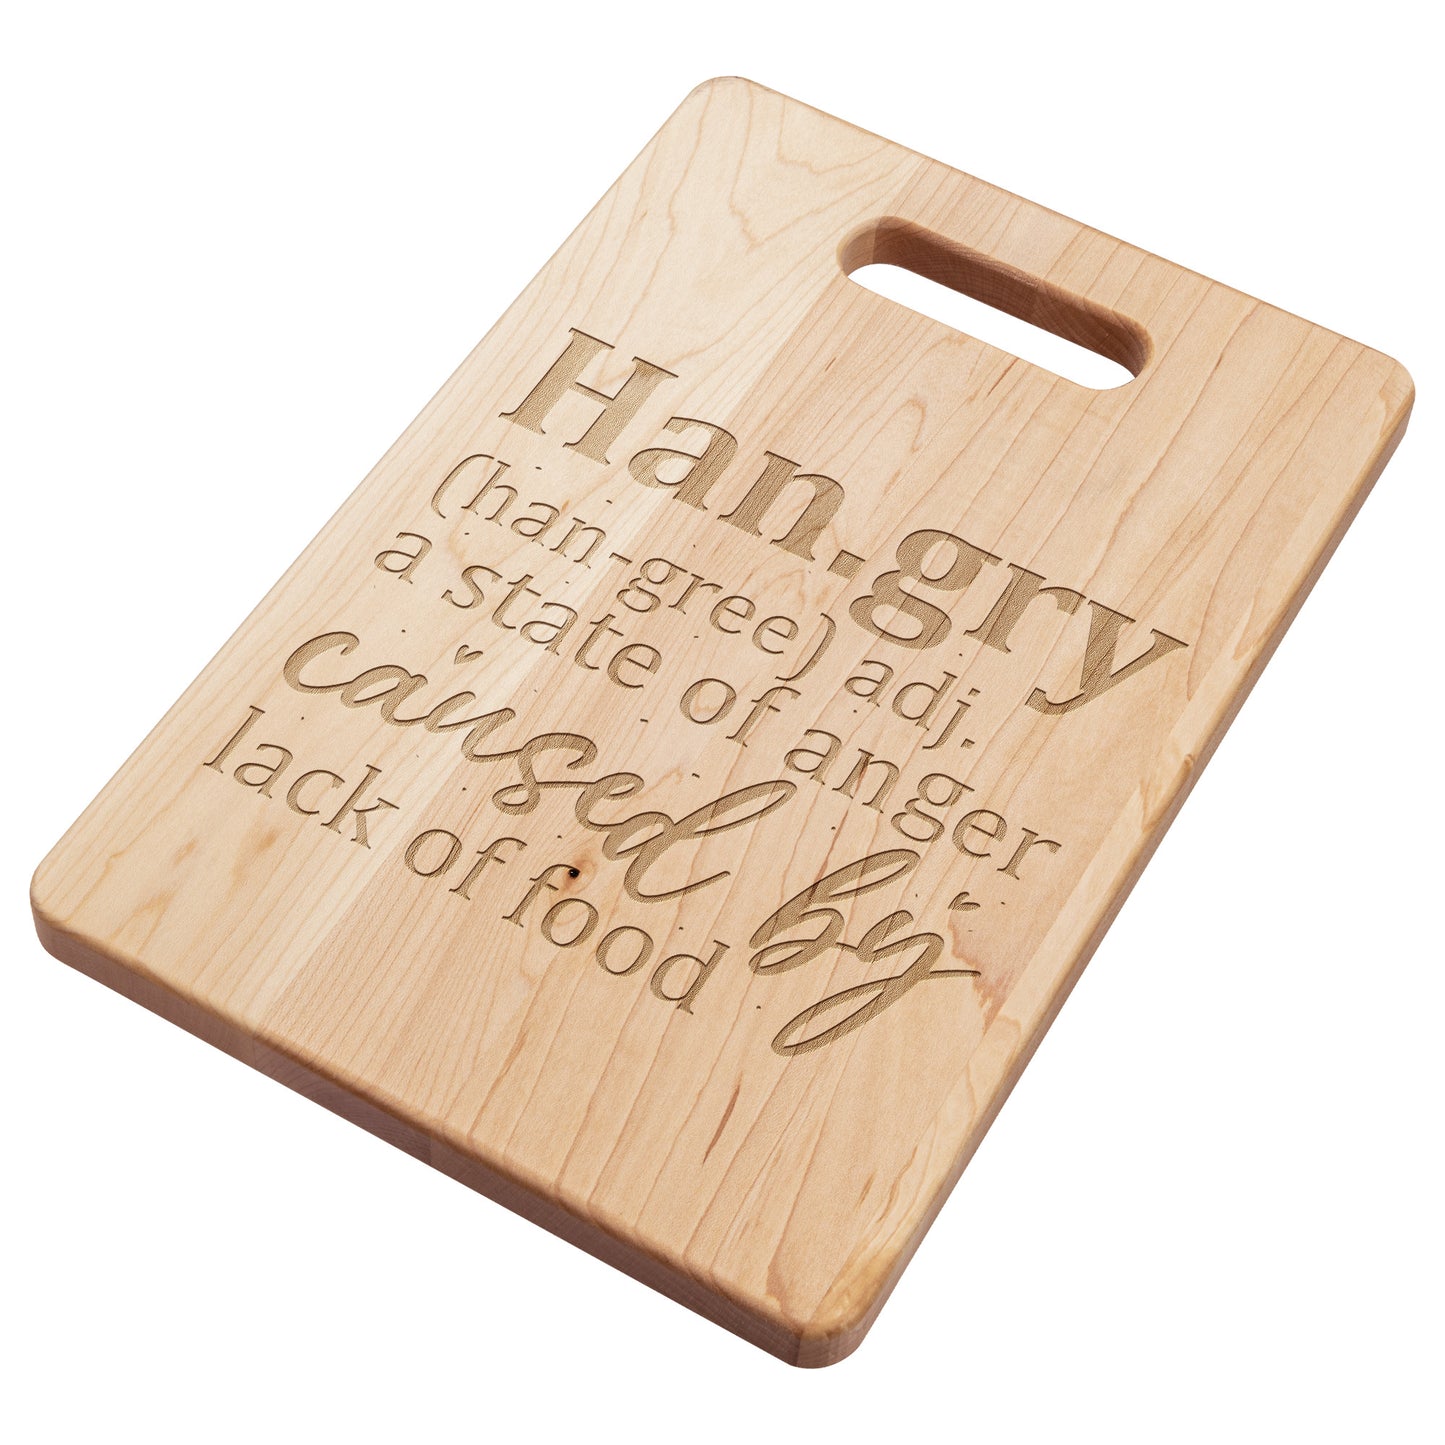 "Hangry" Maple Cutting Board